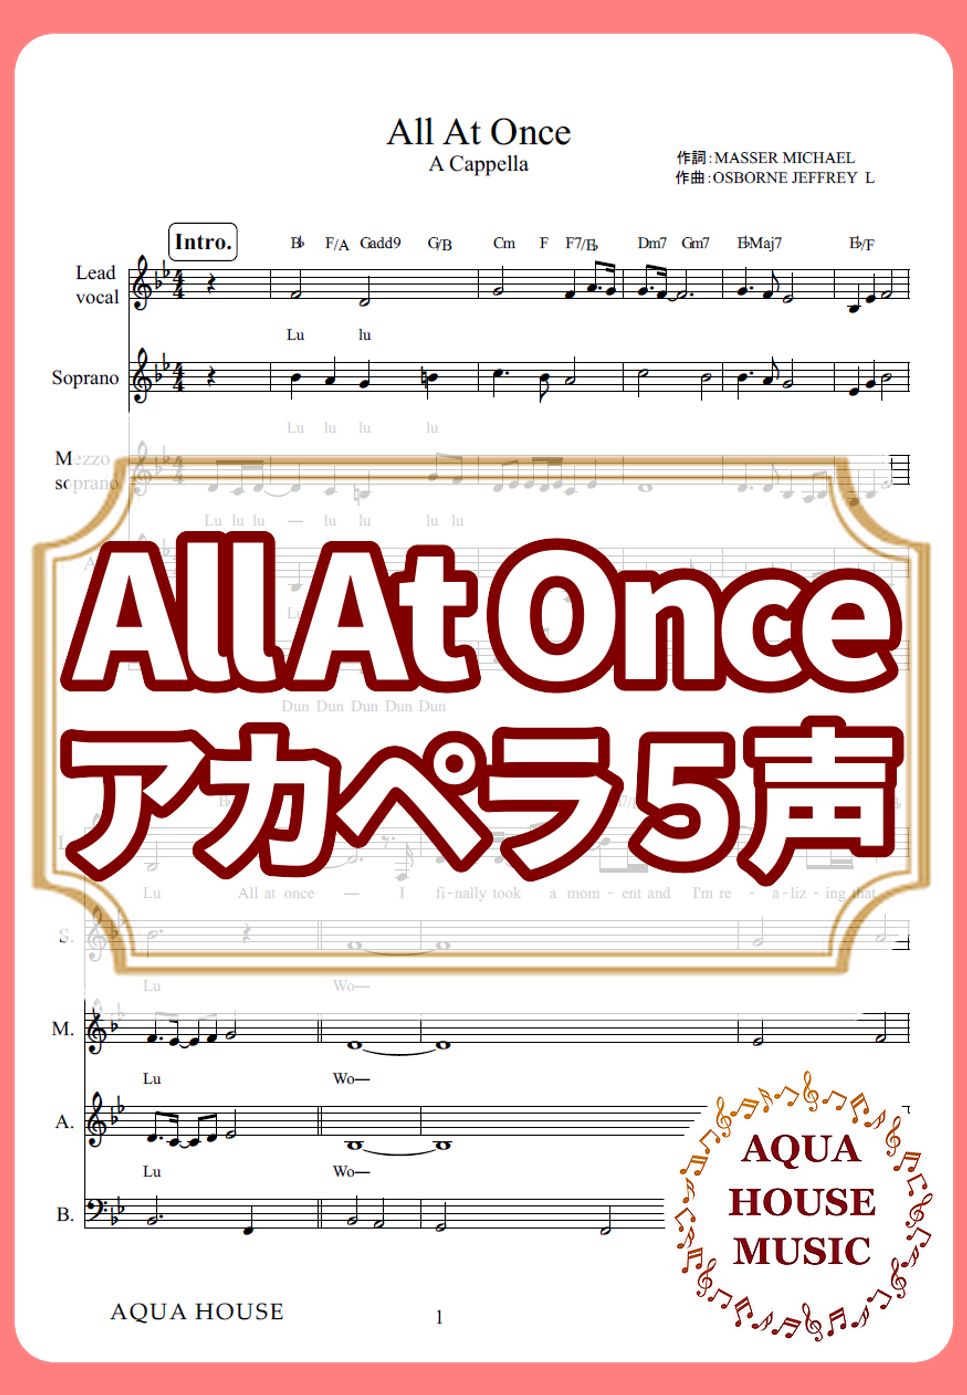 Whitney Houston - All At Once (アカペラ楽譜♪５声ボイパなし) by 飯田 亜紗子